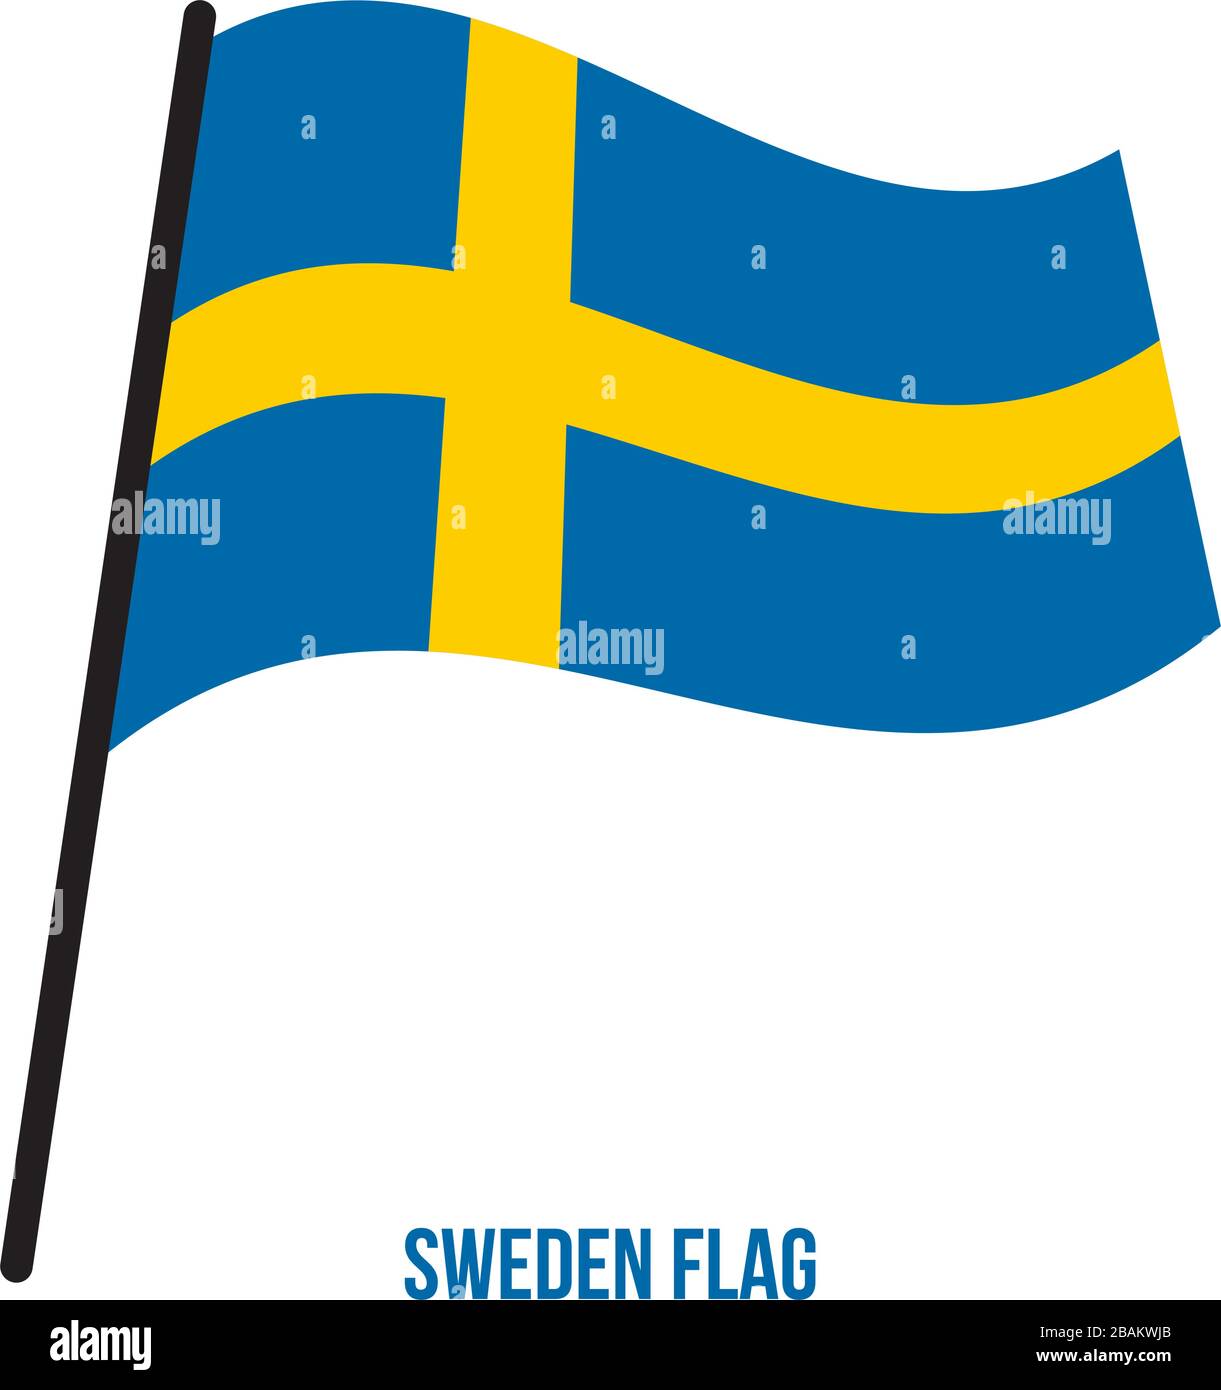 Sweden Flag Waving Vector Illustration on White Background. Sweden National Flag. Stock Vector